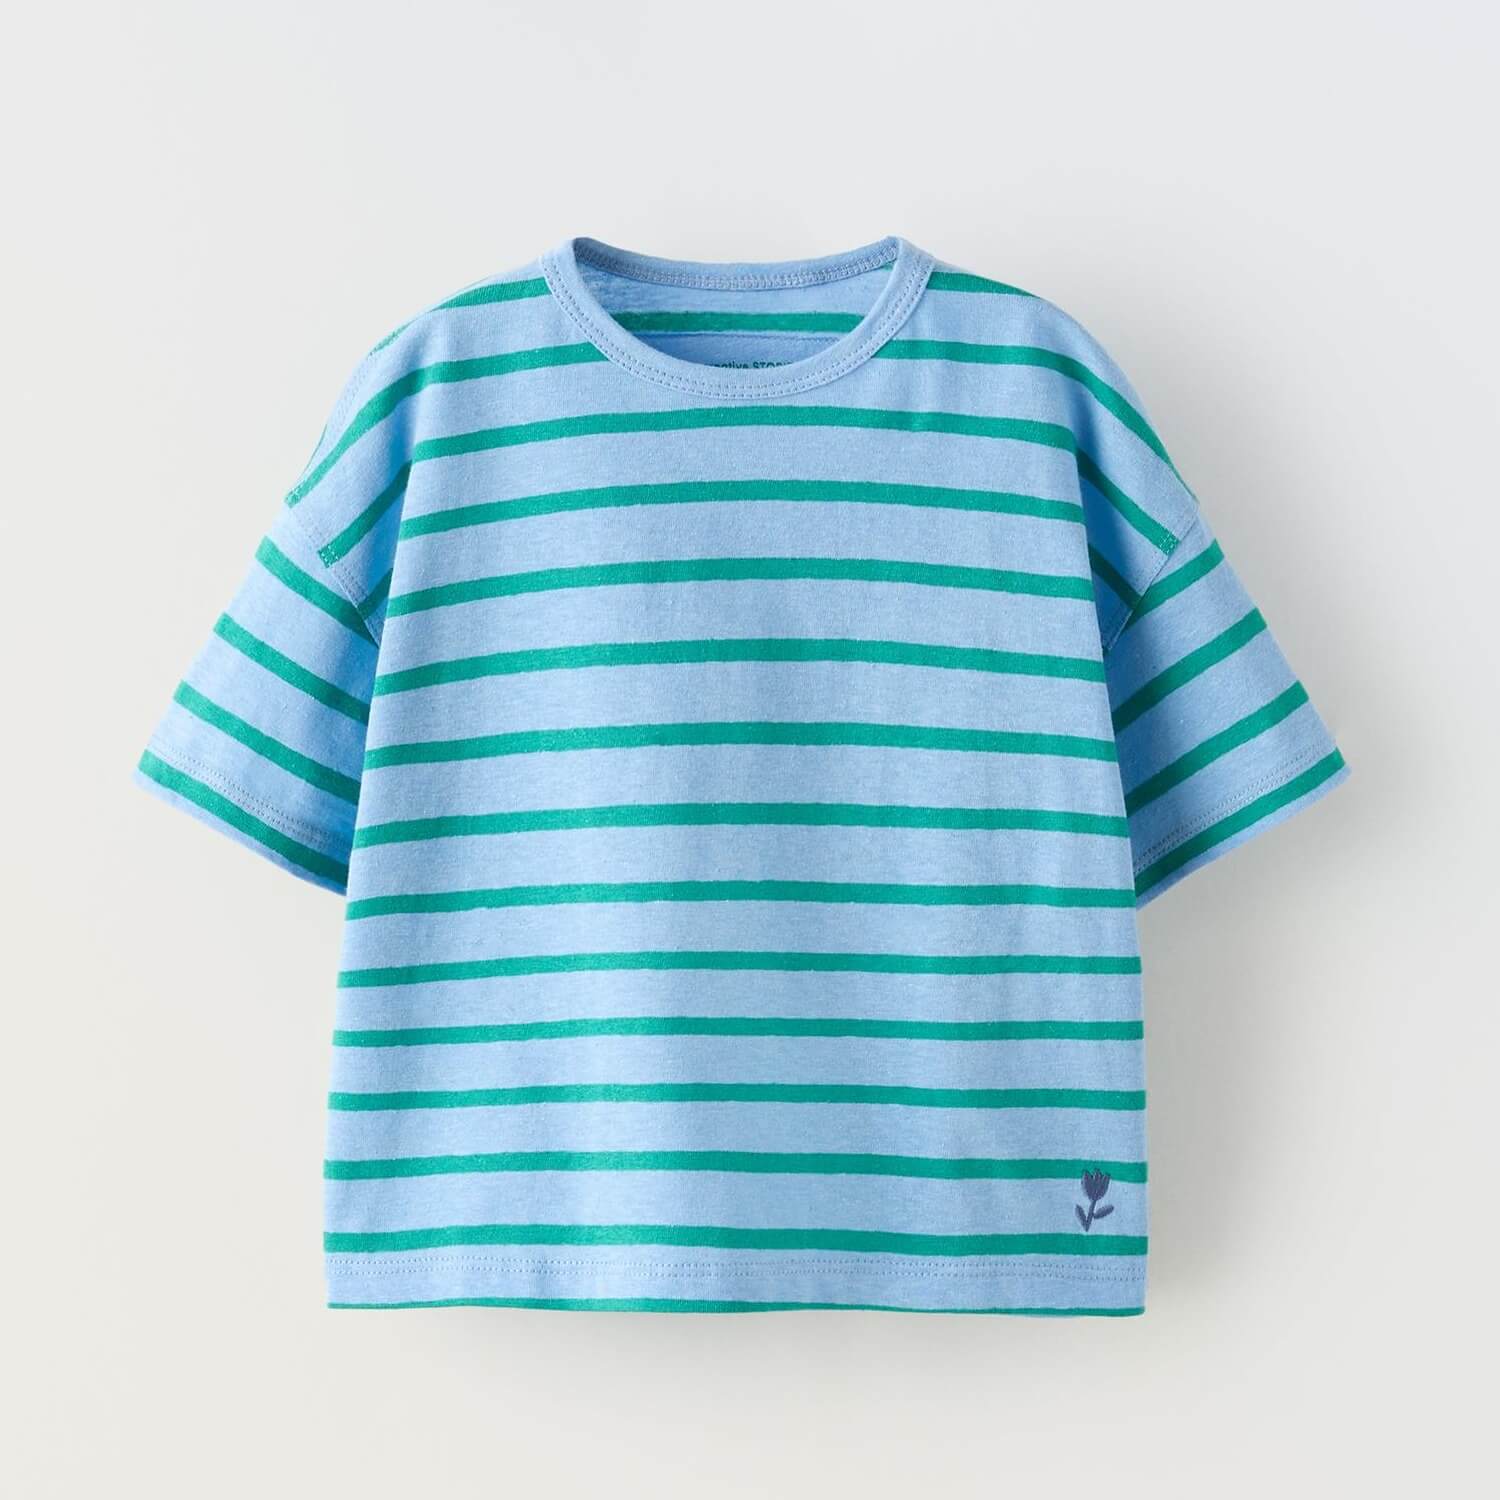 Футболка Zara Woven Striped With Embroidery, голубой/зеленый футболка zara woven striped with embroidery голубой зеленый